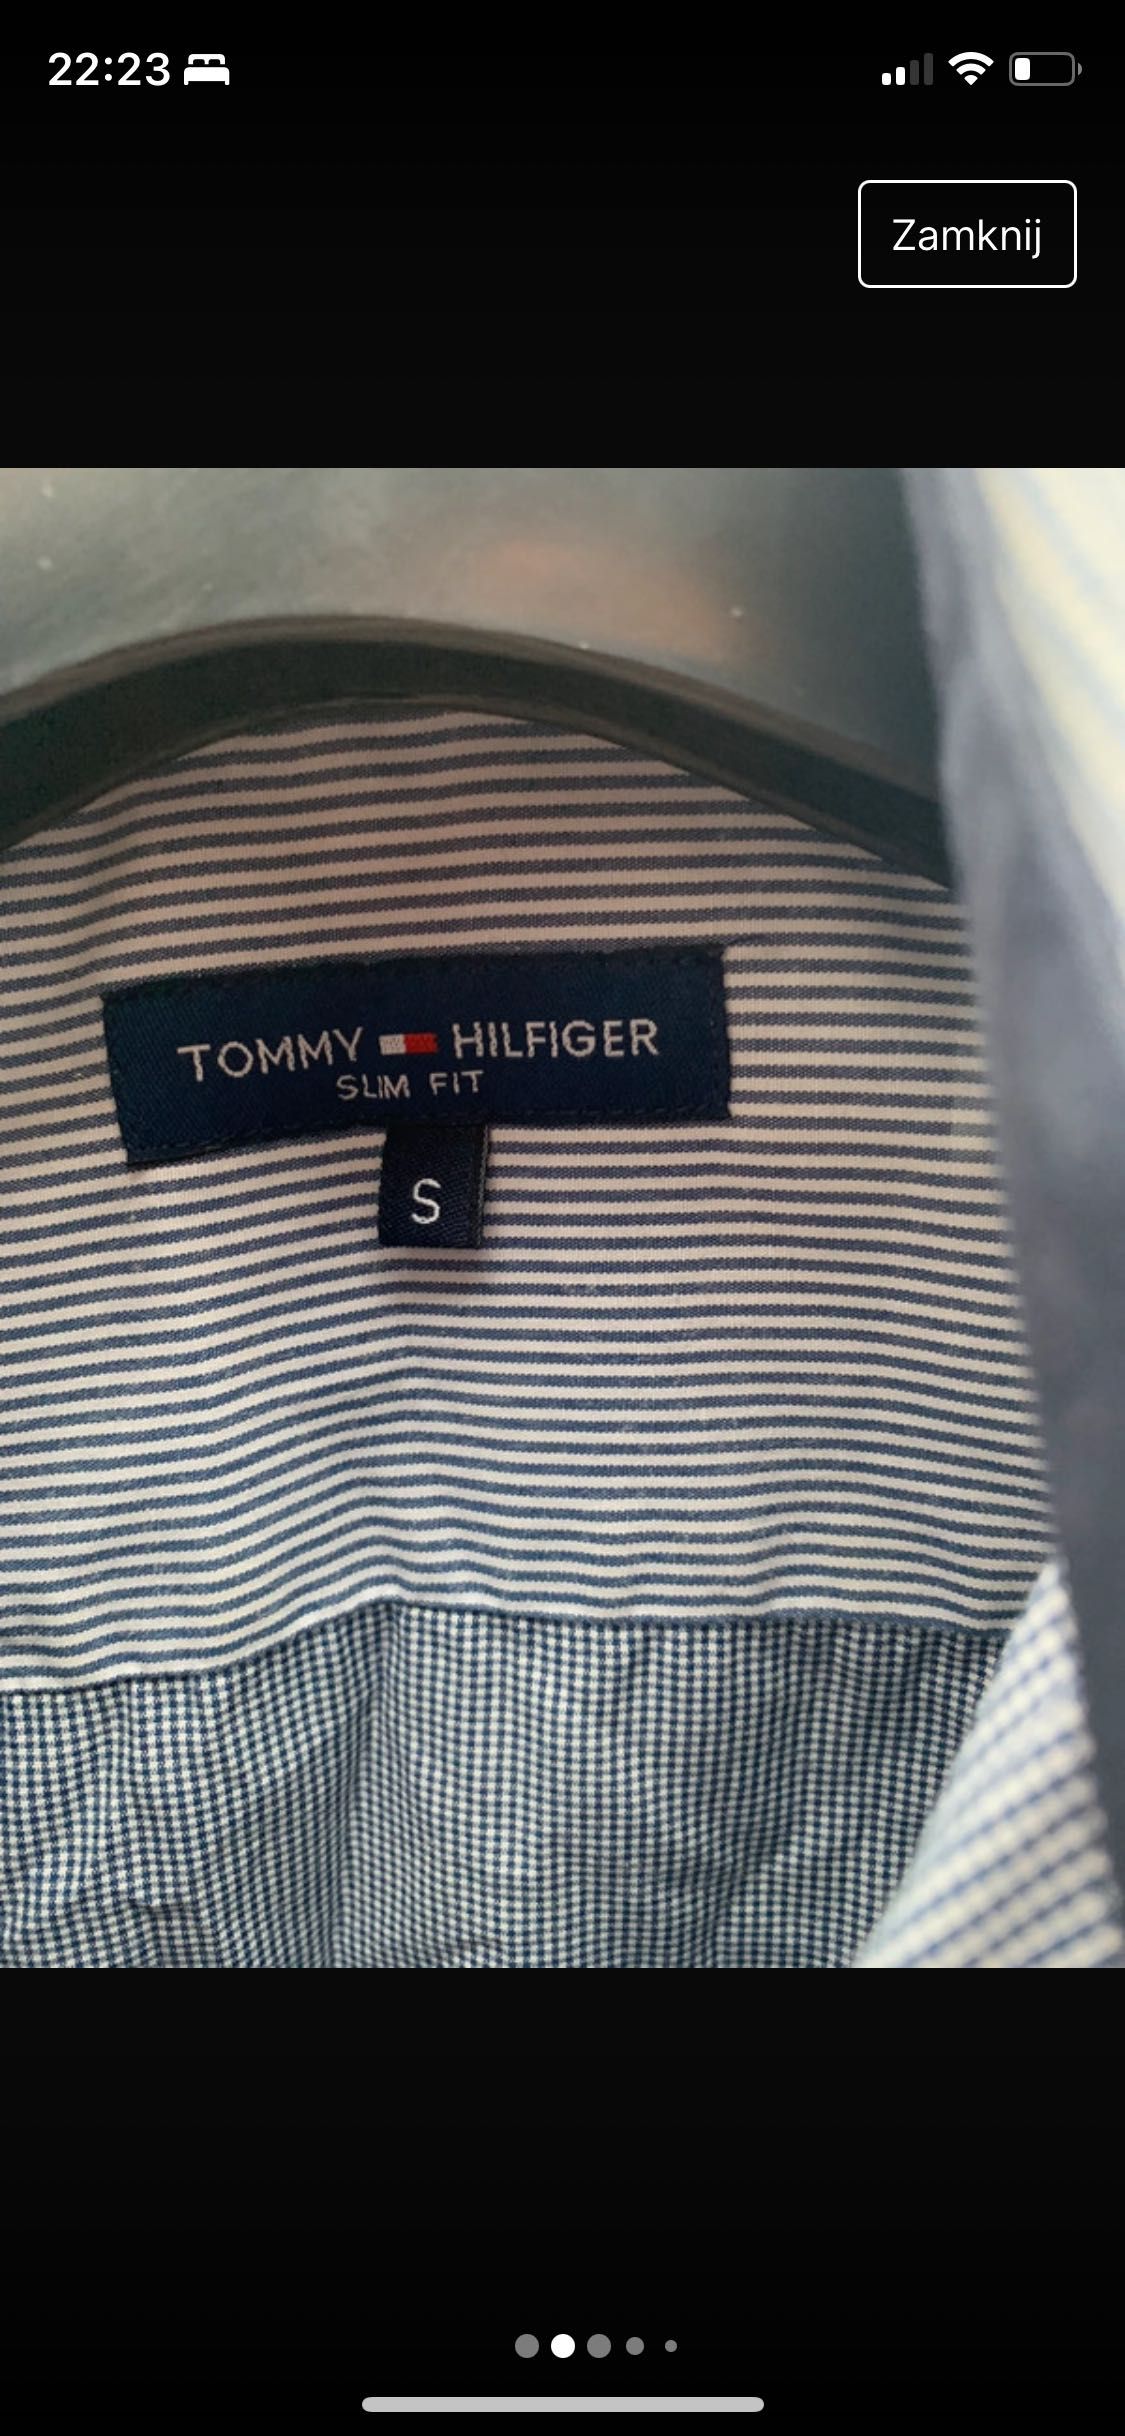 Piękna koszula Tommy Hilfiger